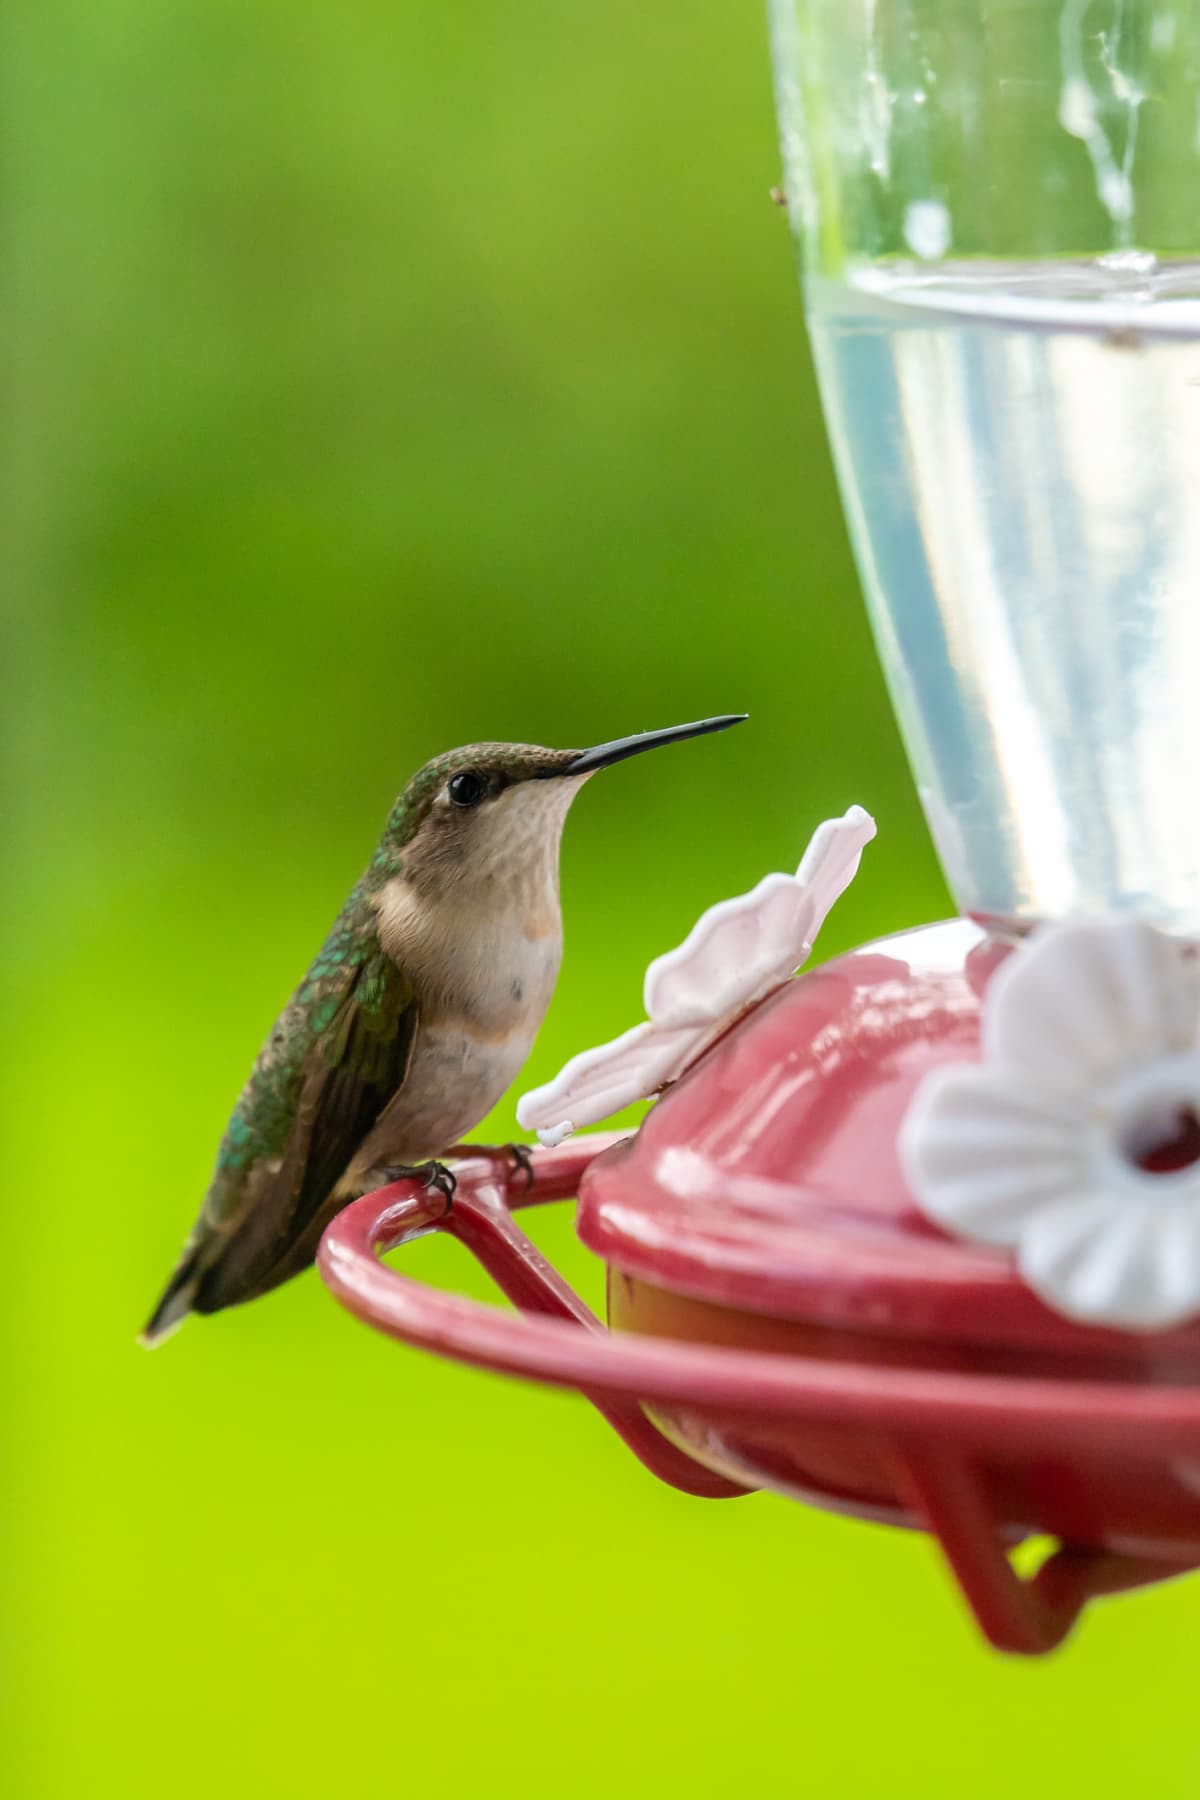 A cute Hummingbird enjoying sugar water from a red bird feeder in rural Minnesota